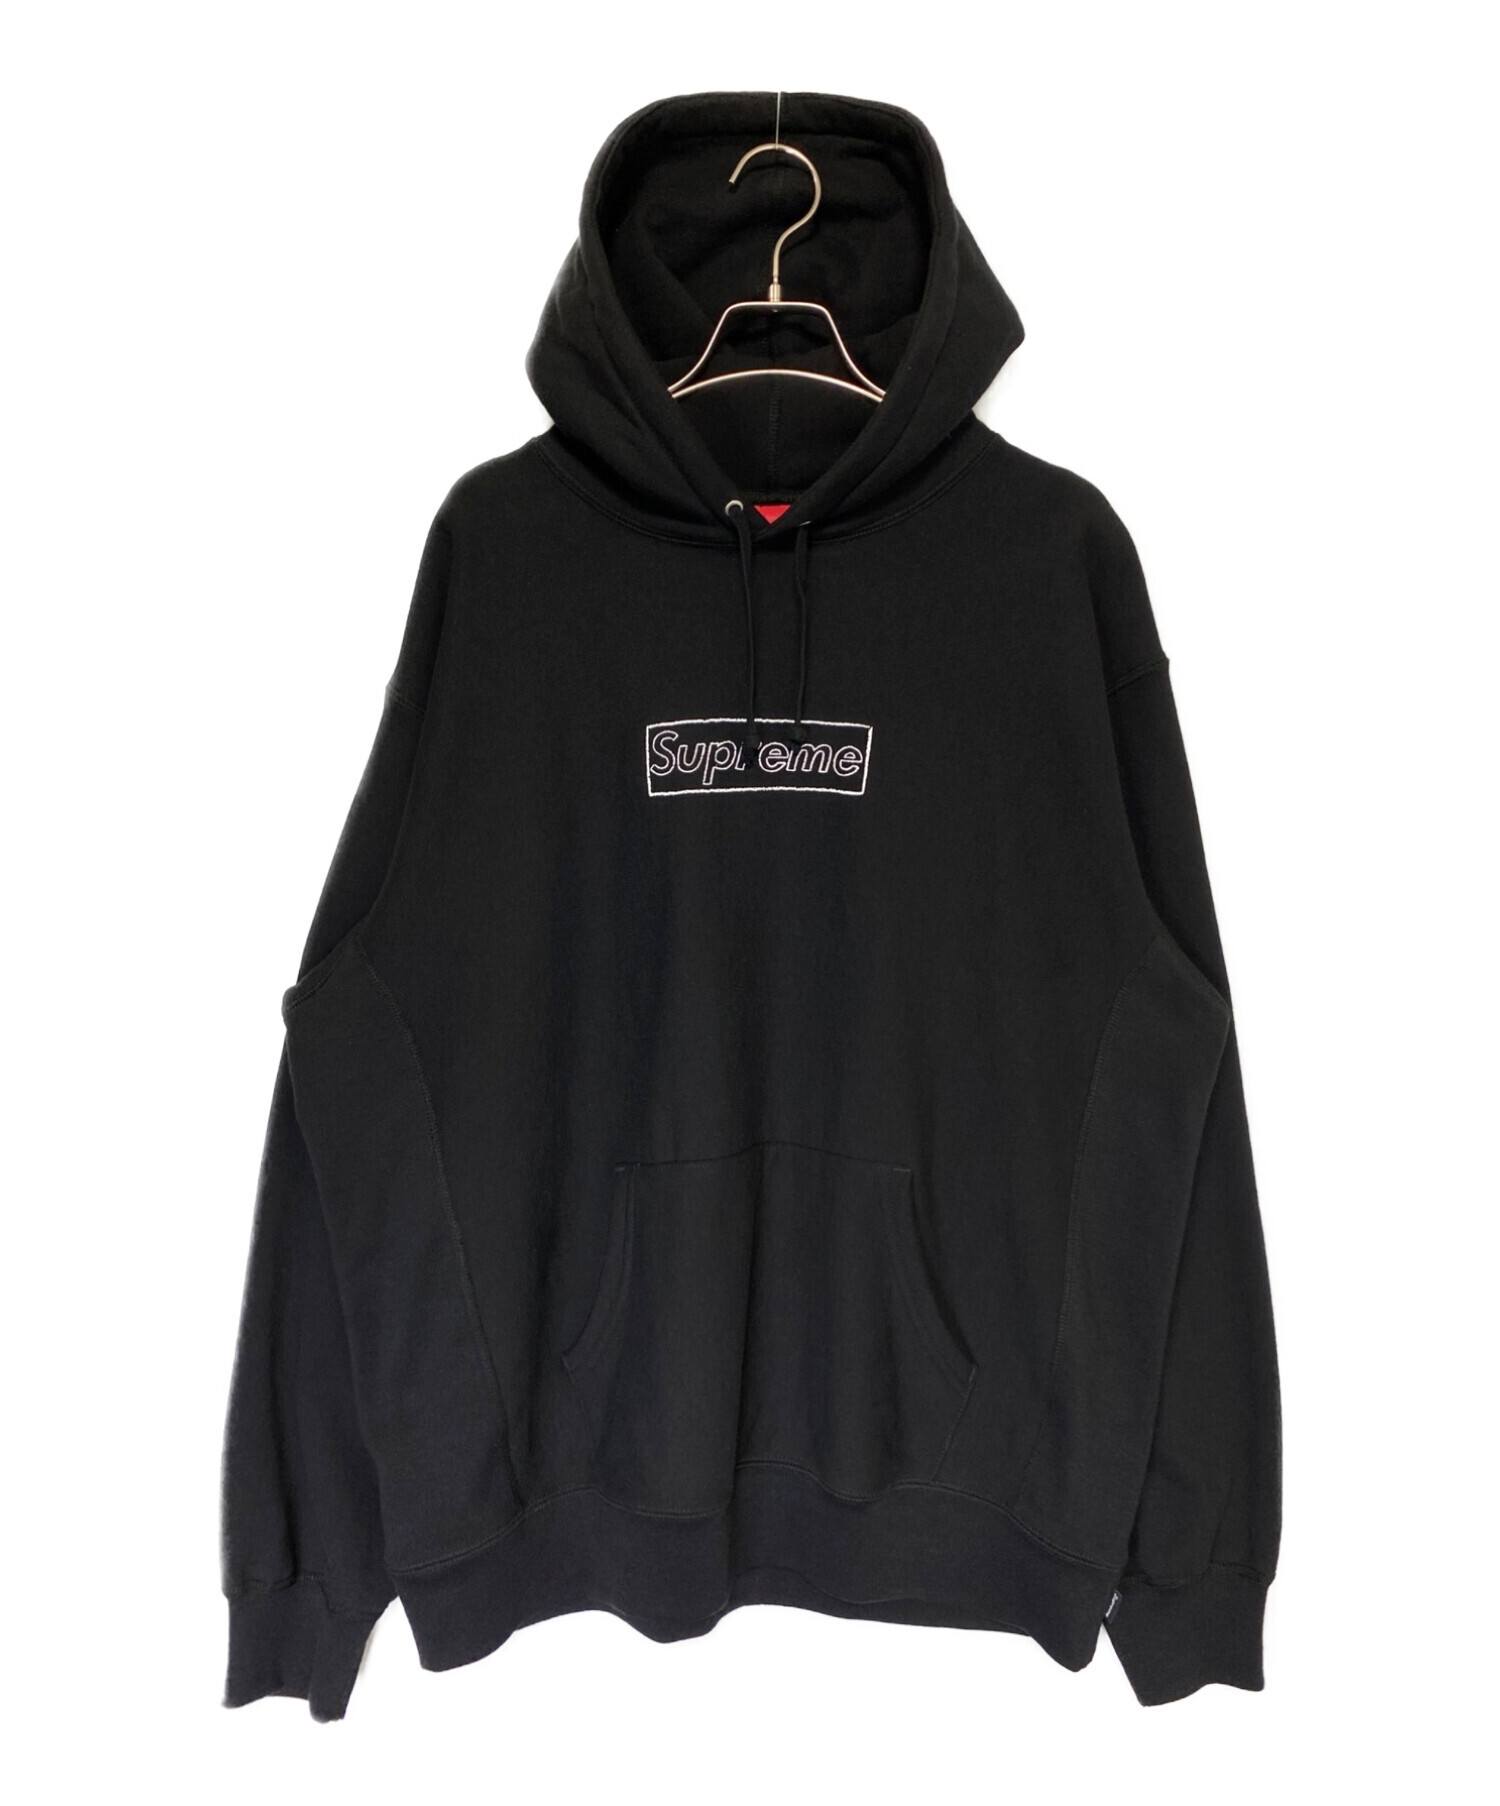 Supreme Chalk box logo hooded sweatshirt